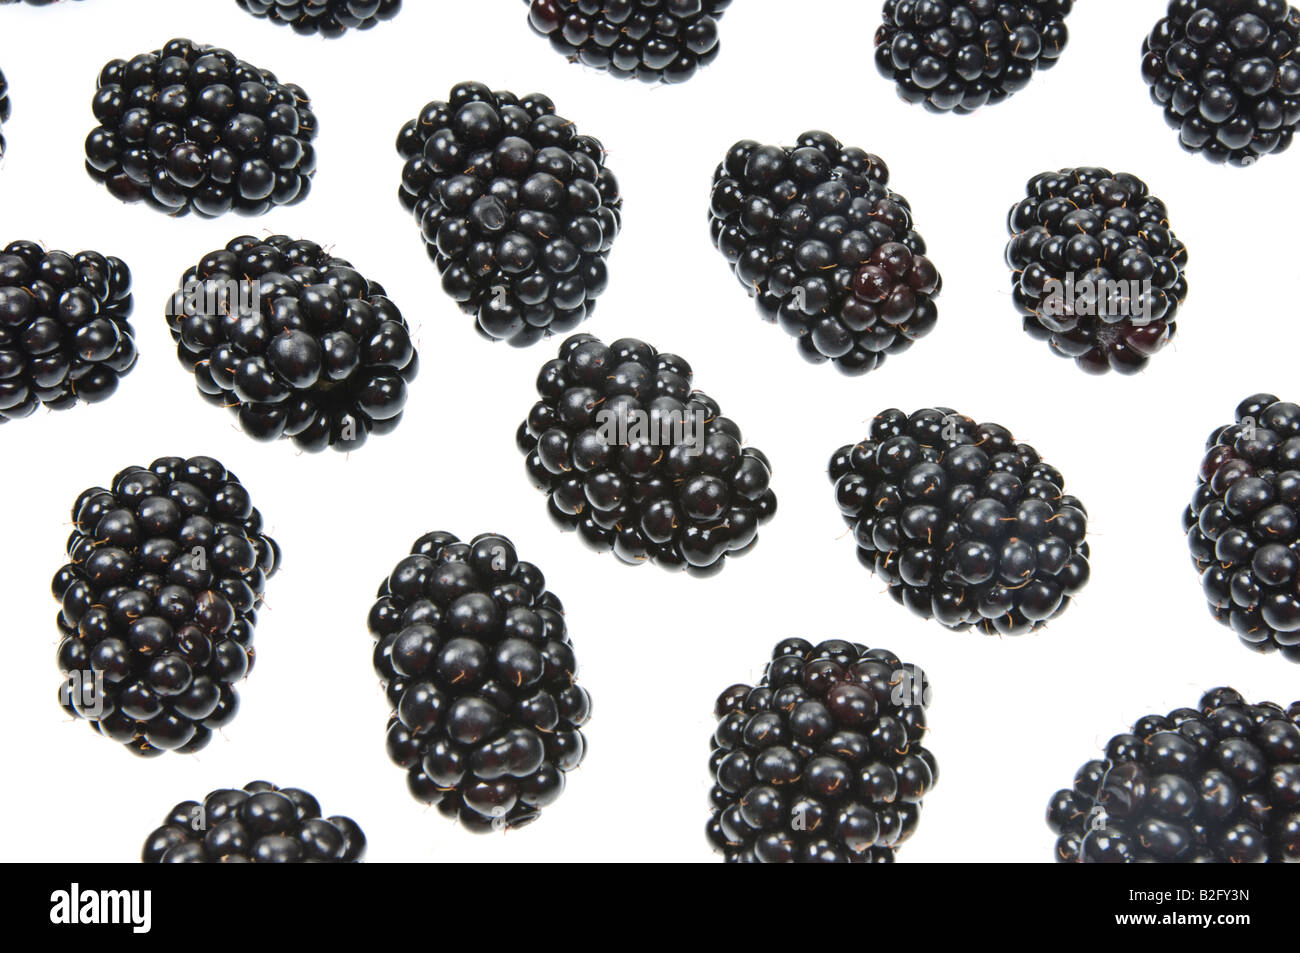 Rubas fruit Brombeere blackberry dewberry black berries boysenberry marionberry fresh on white Background Stock Photo